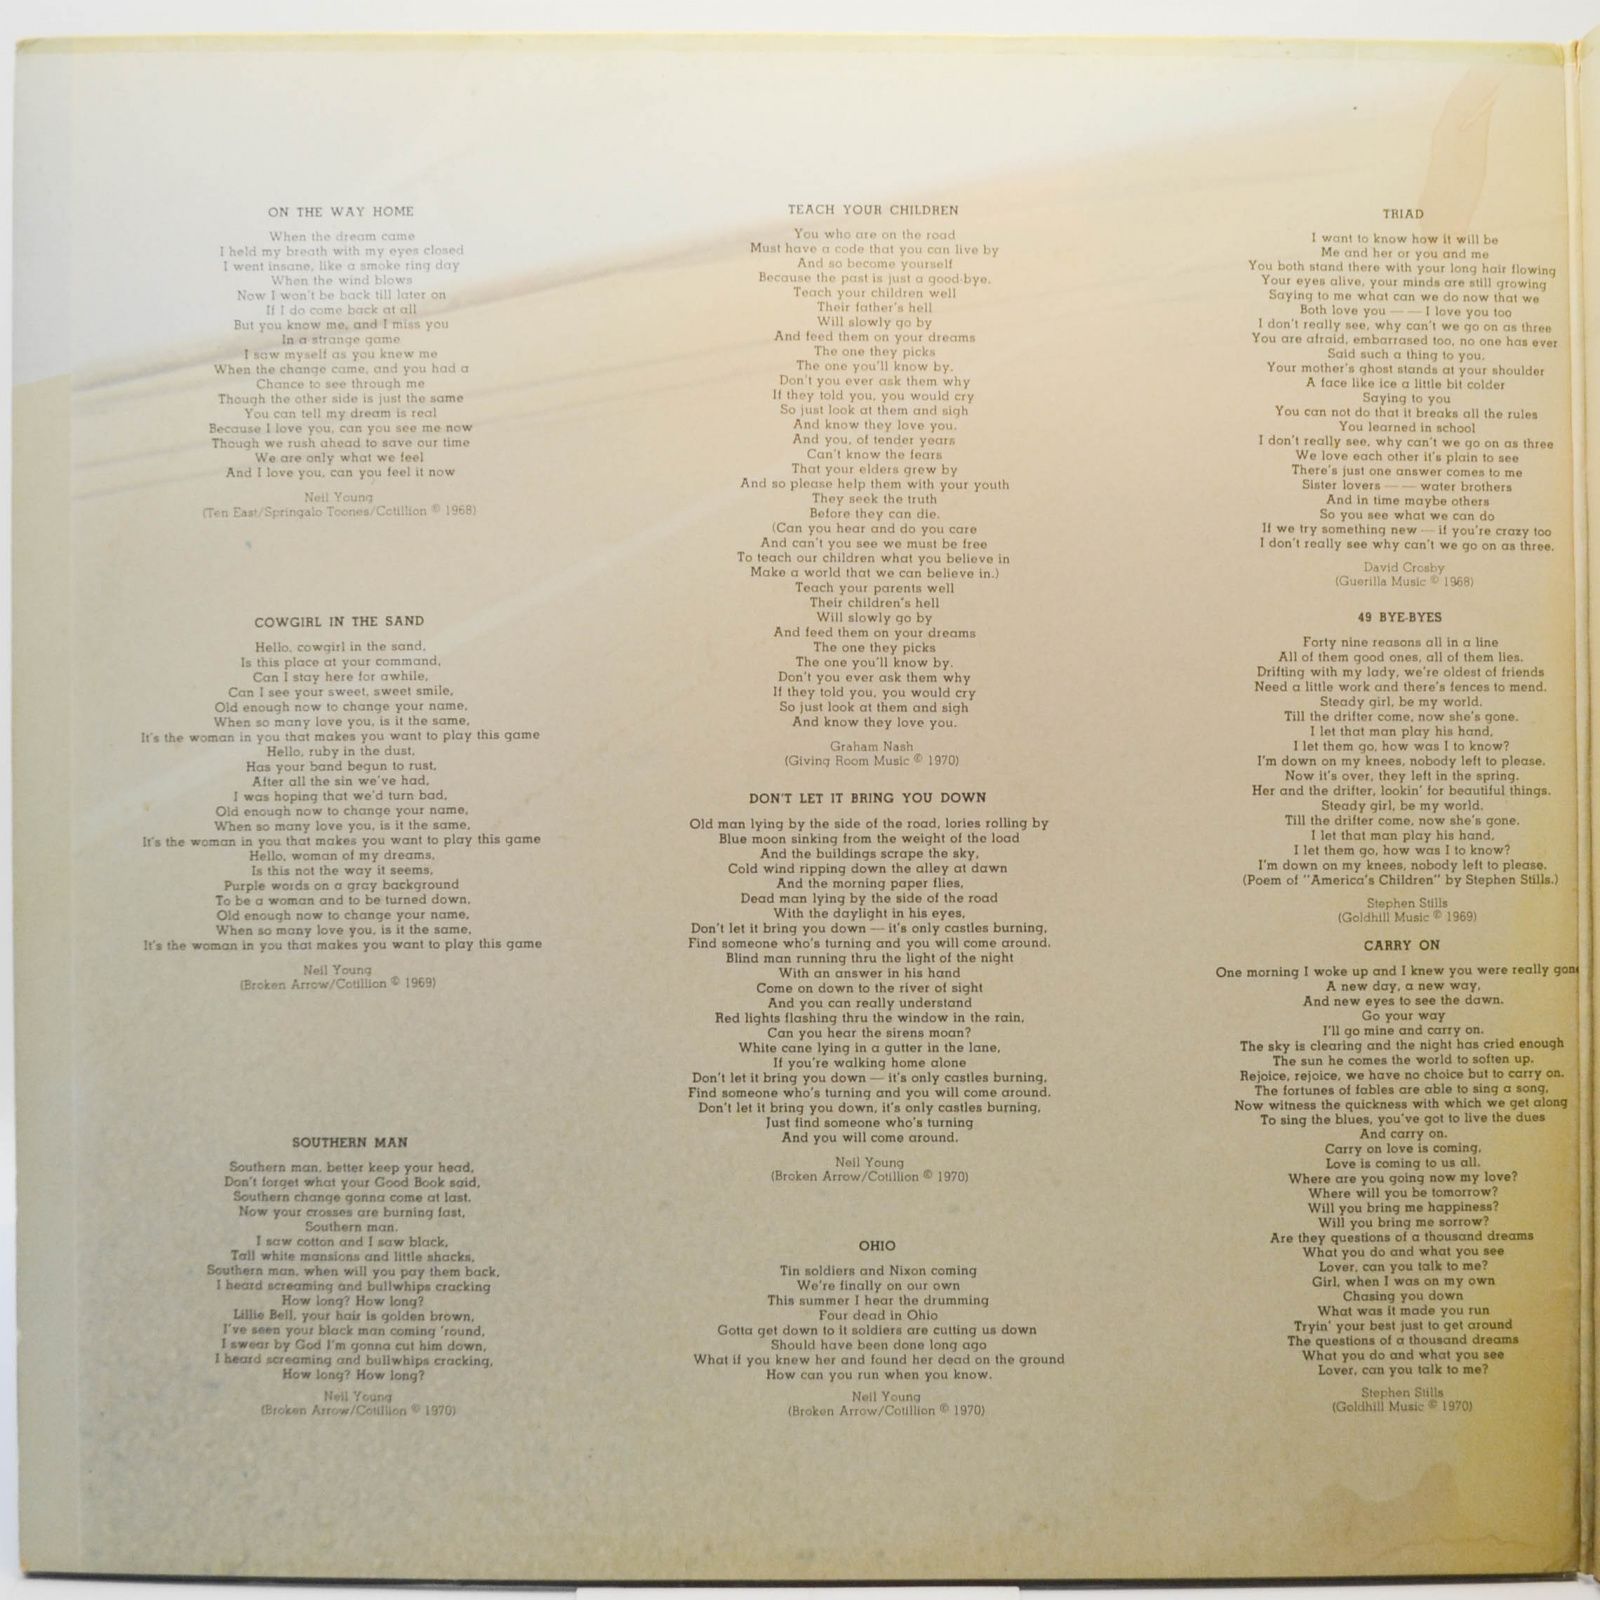 Crosby, Stills, Nash & Young — 4 Way Street (2LP), 1973